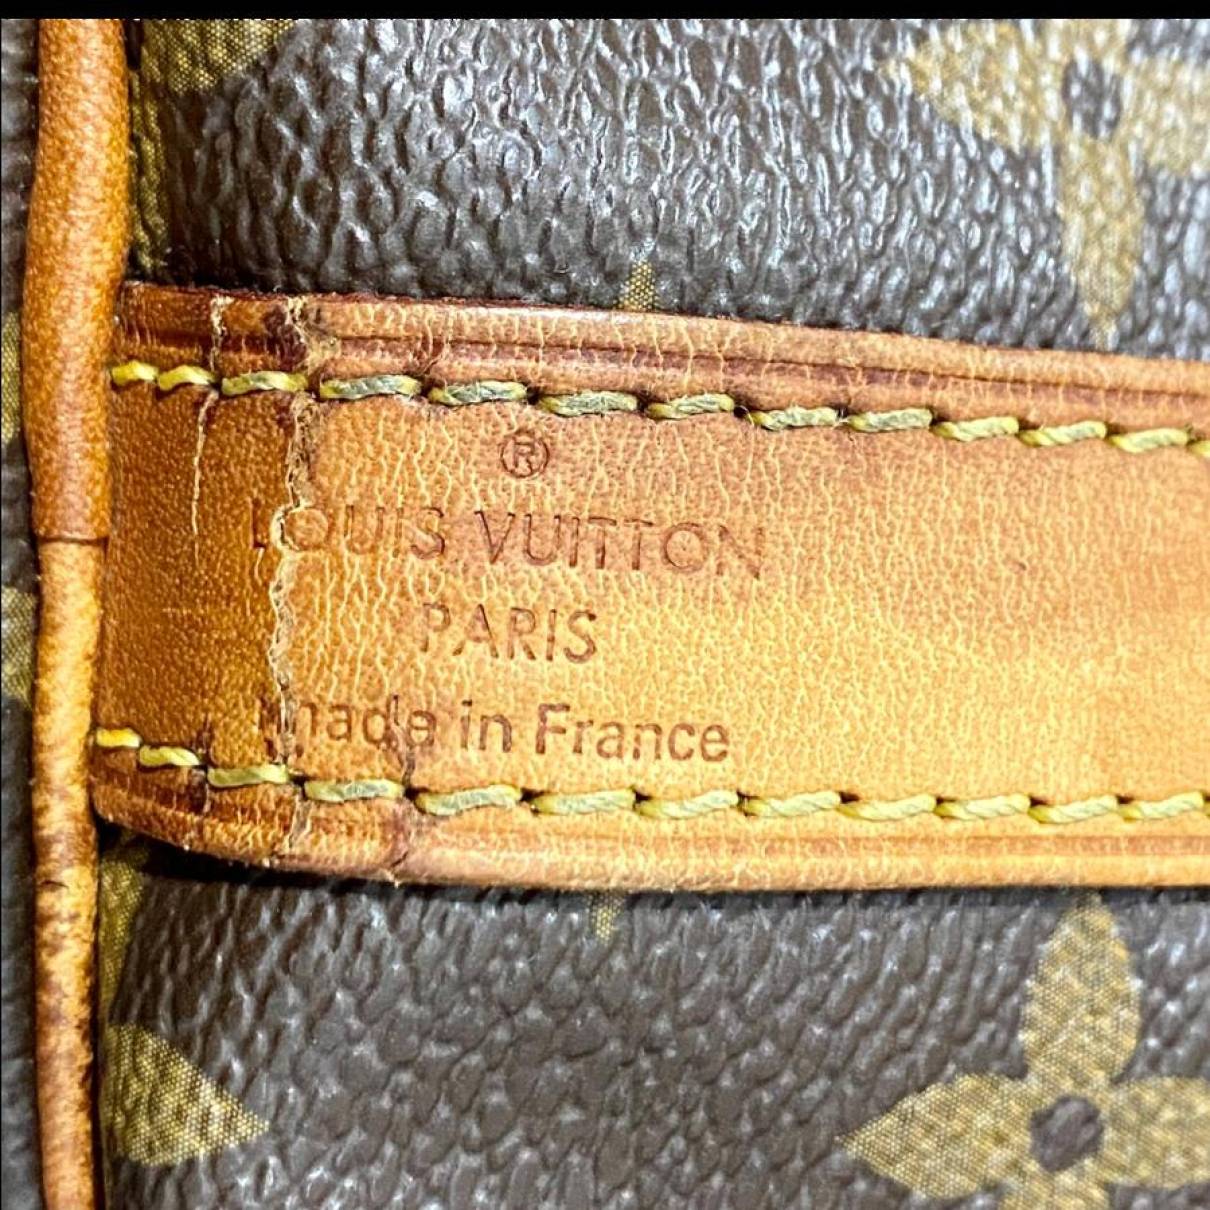 Louis Vuitton Speedy Bandoulière Handbag